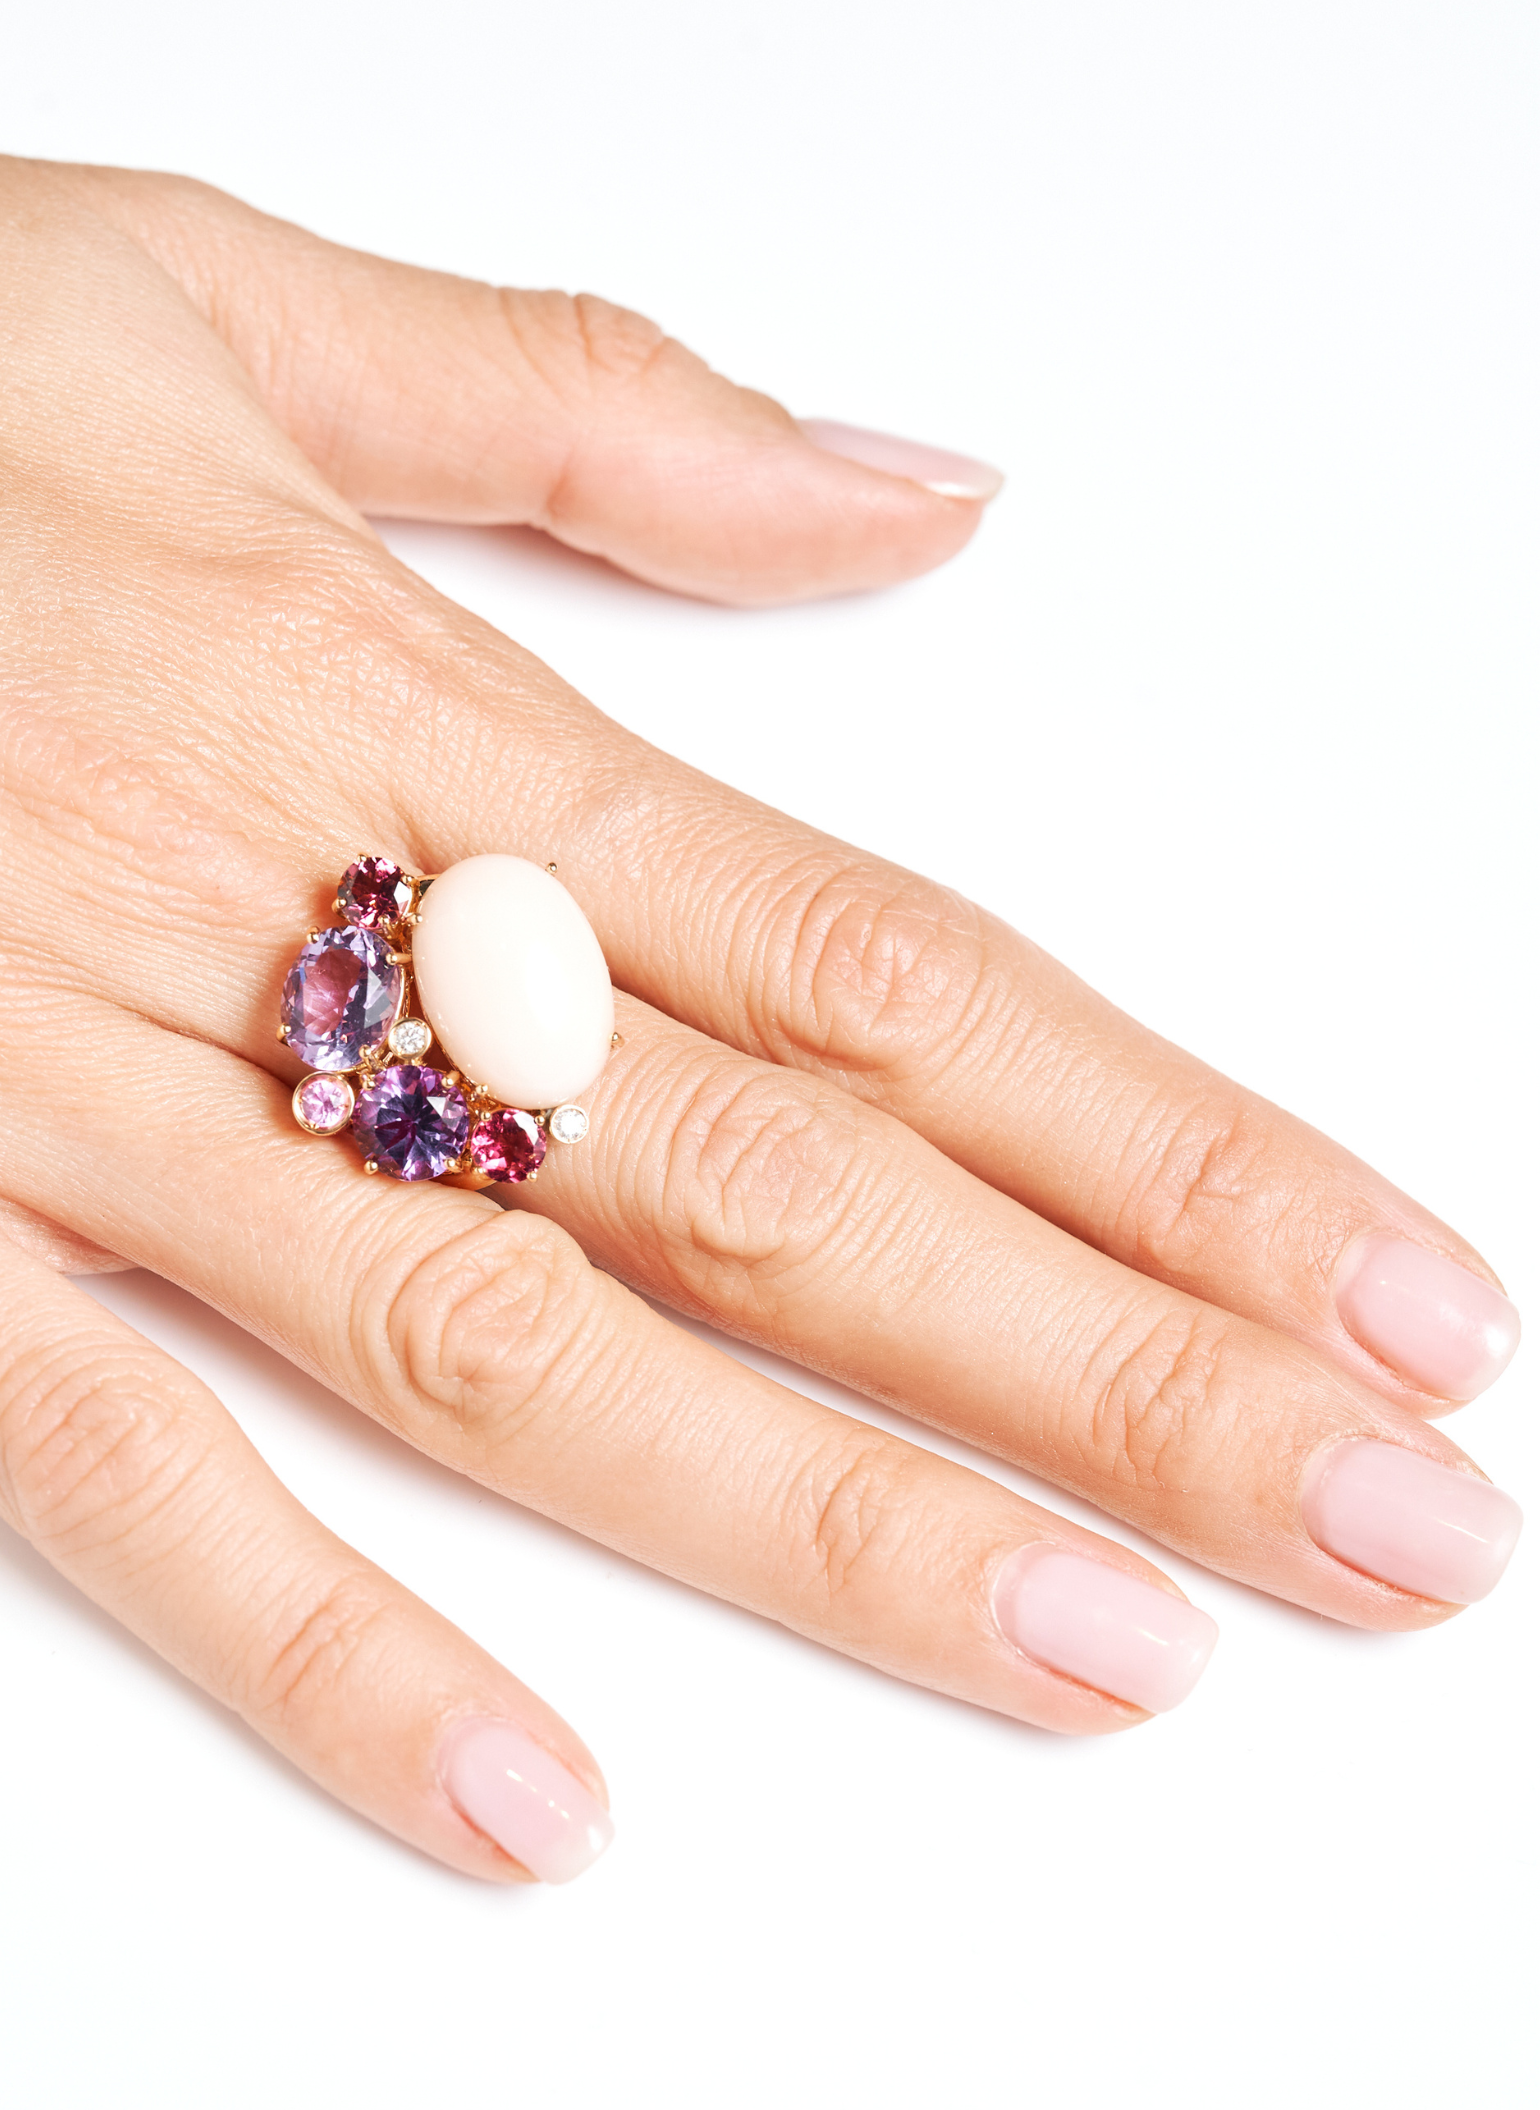 Le Gemme Ruby, Quartz, White Coral and Brilliant Ring